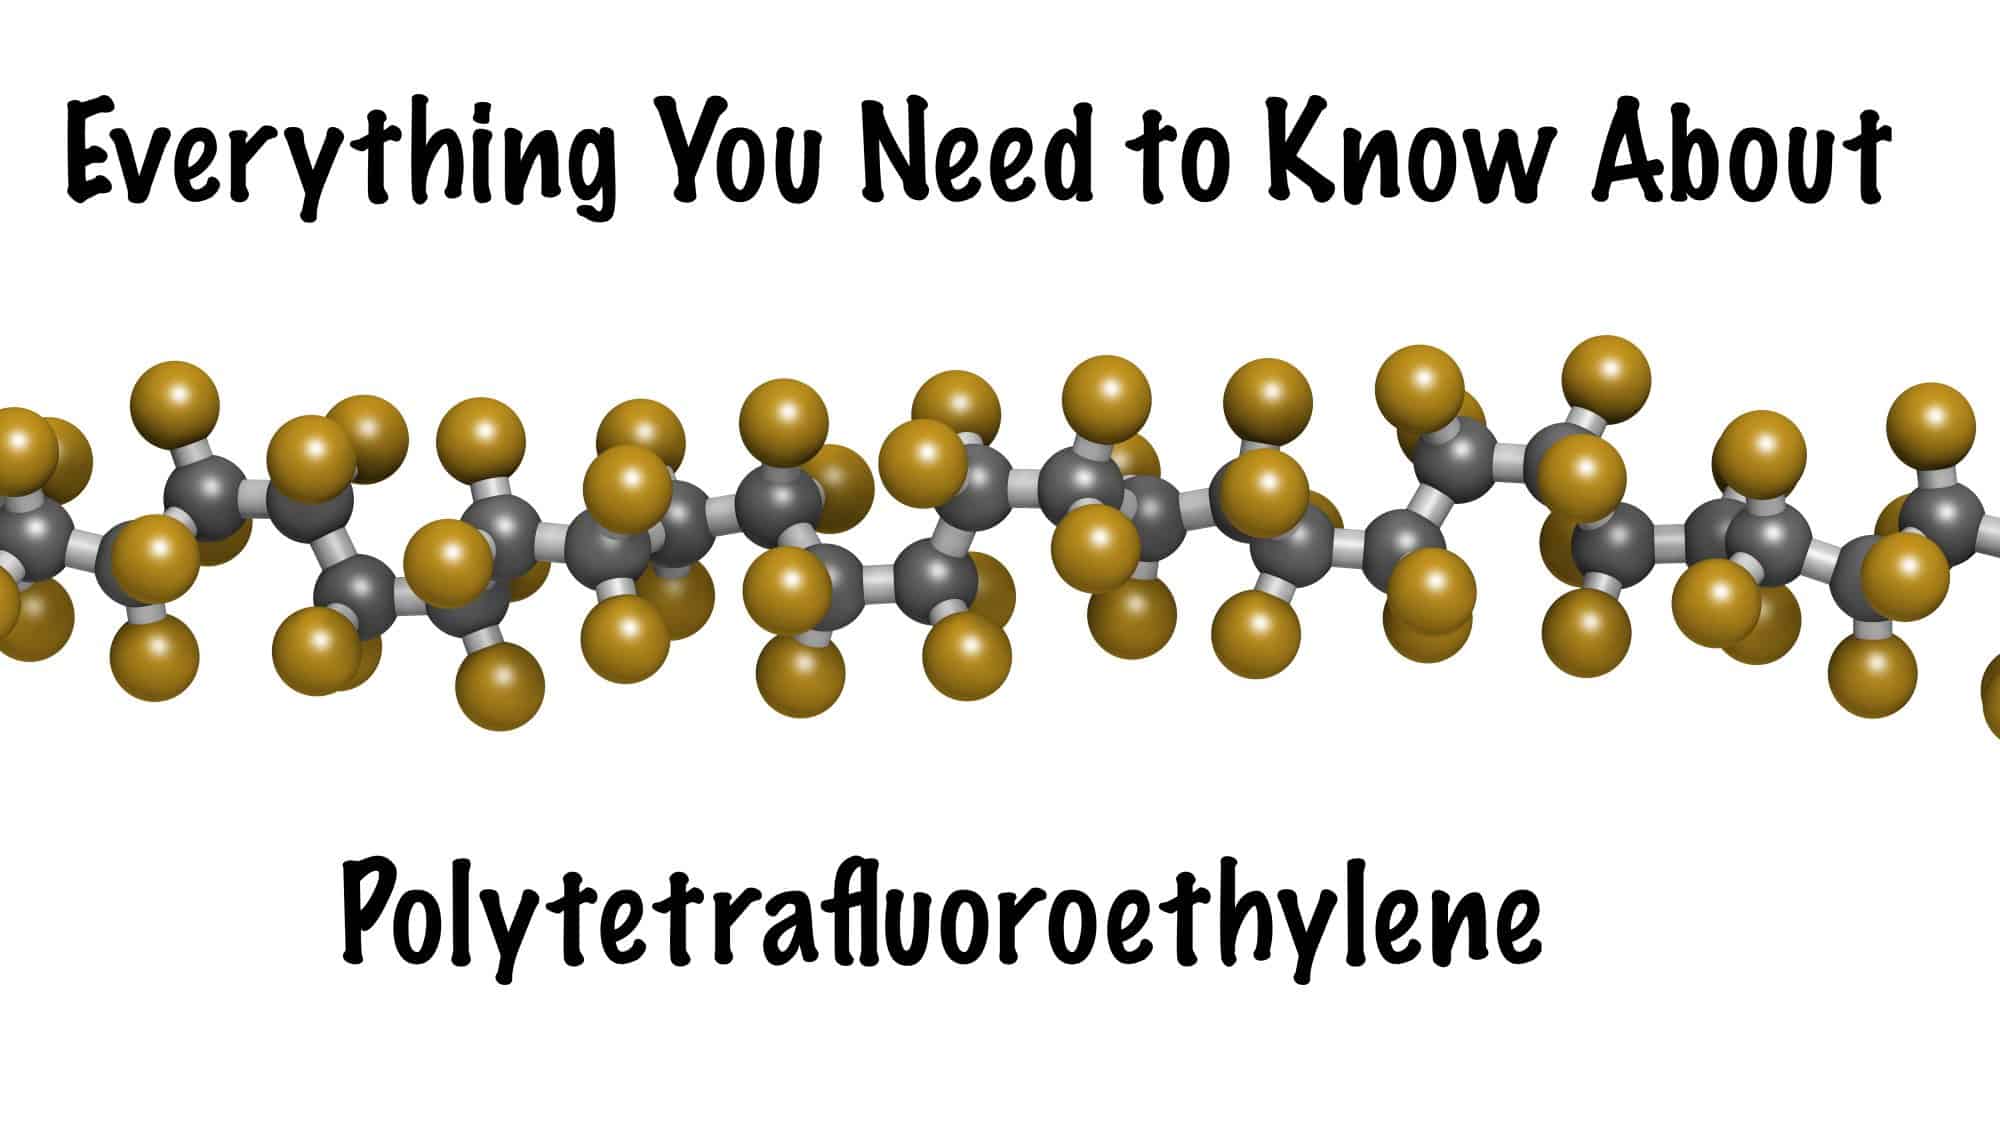 polytetrafluoroethylene uses